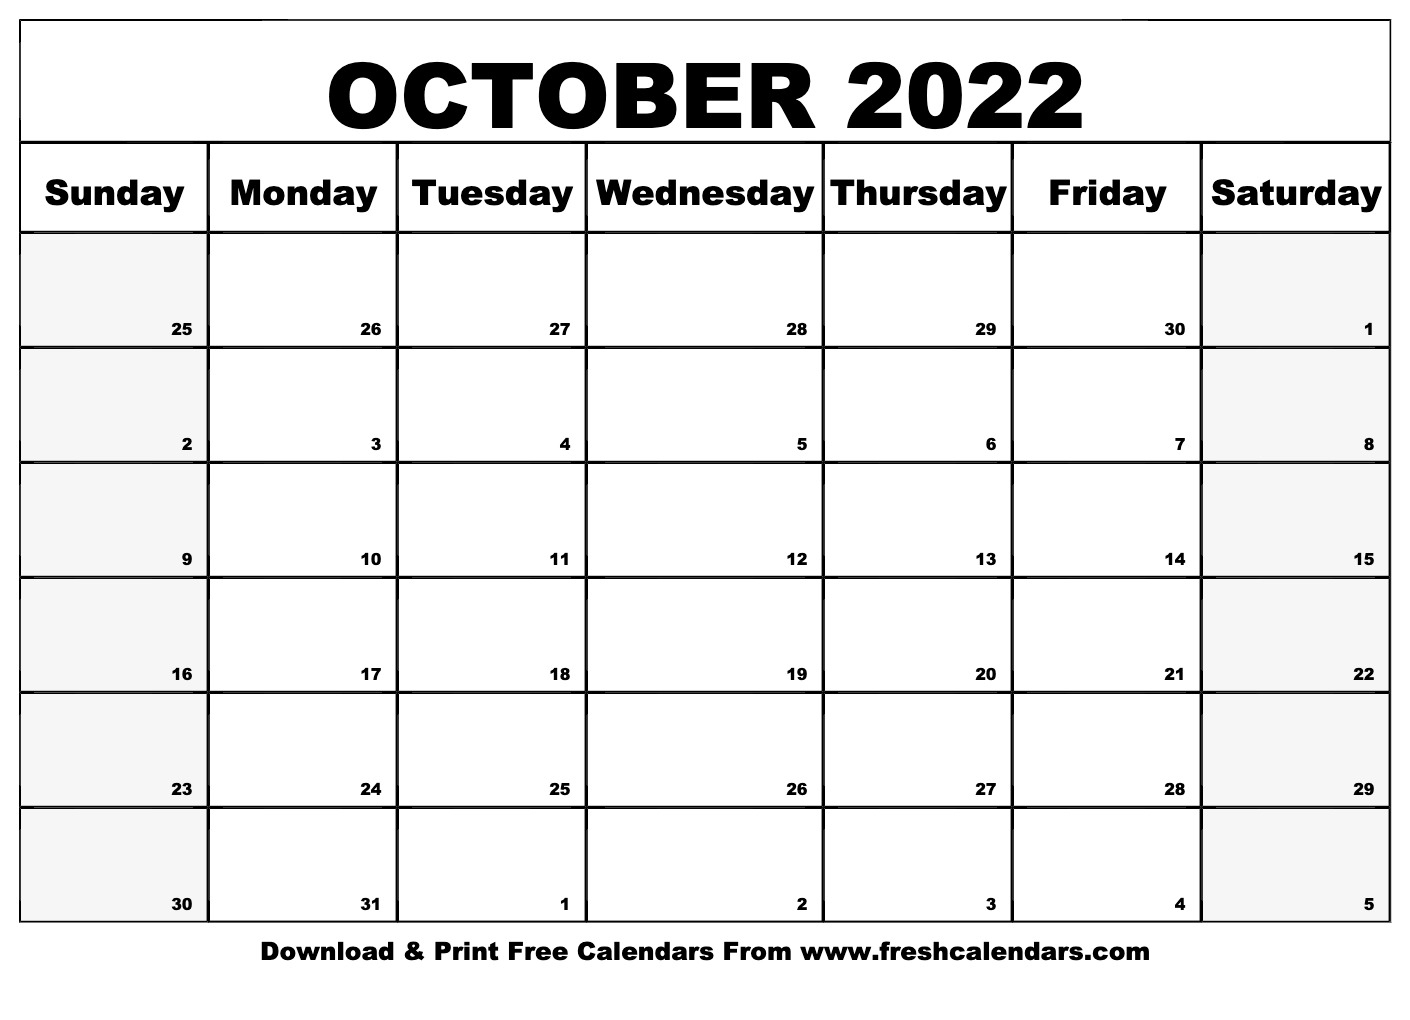 Get Calendar September And October 2022